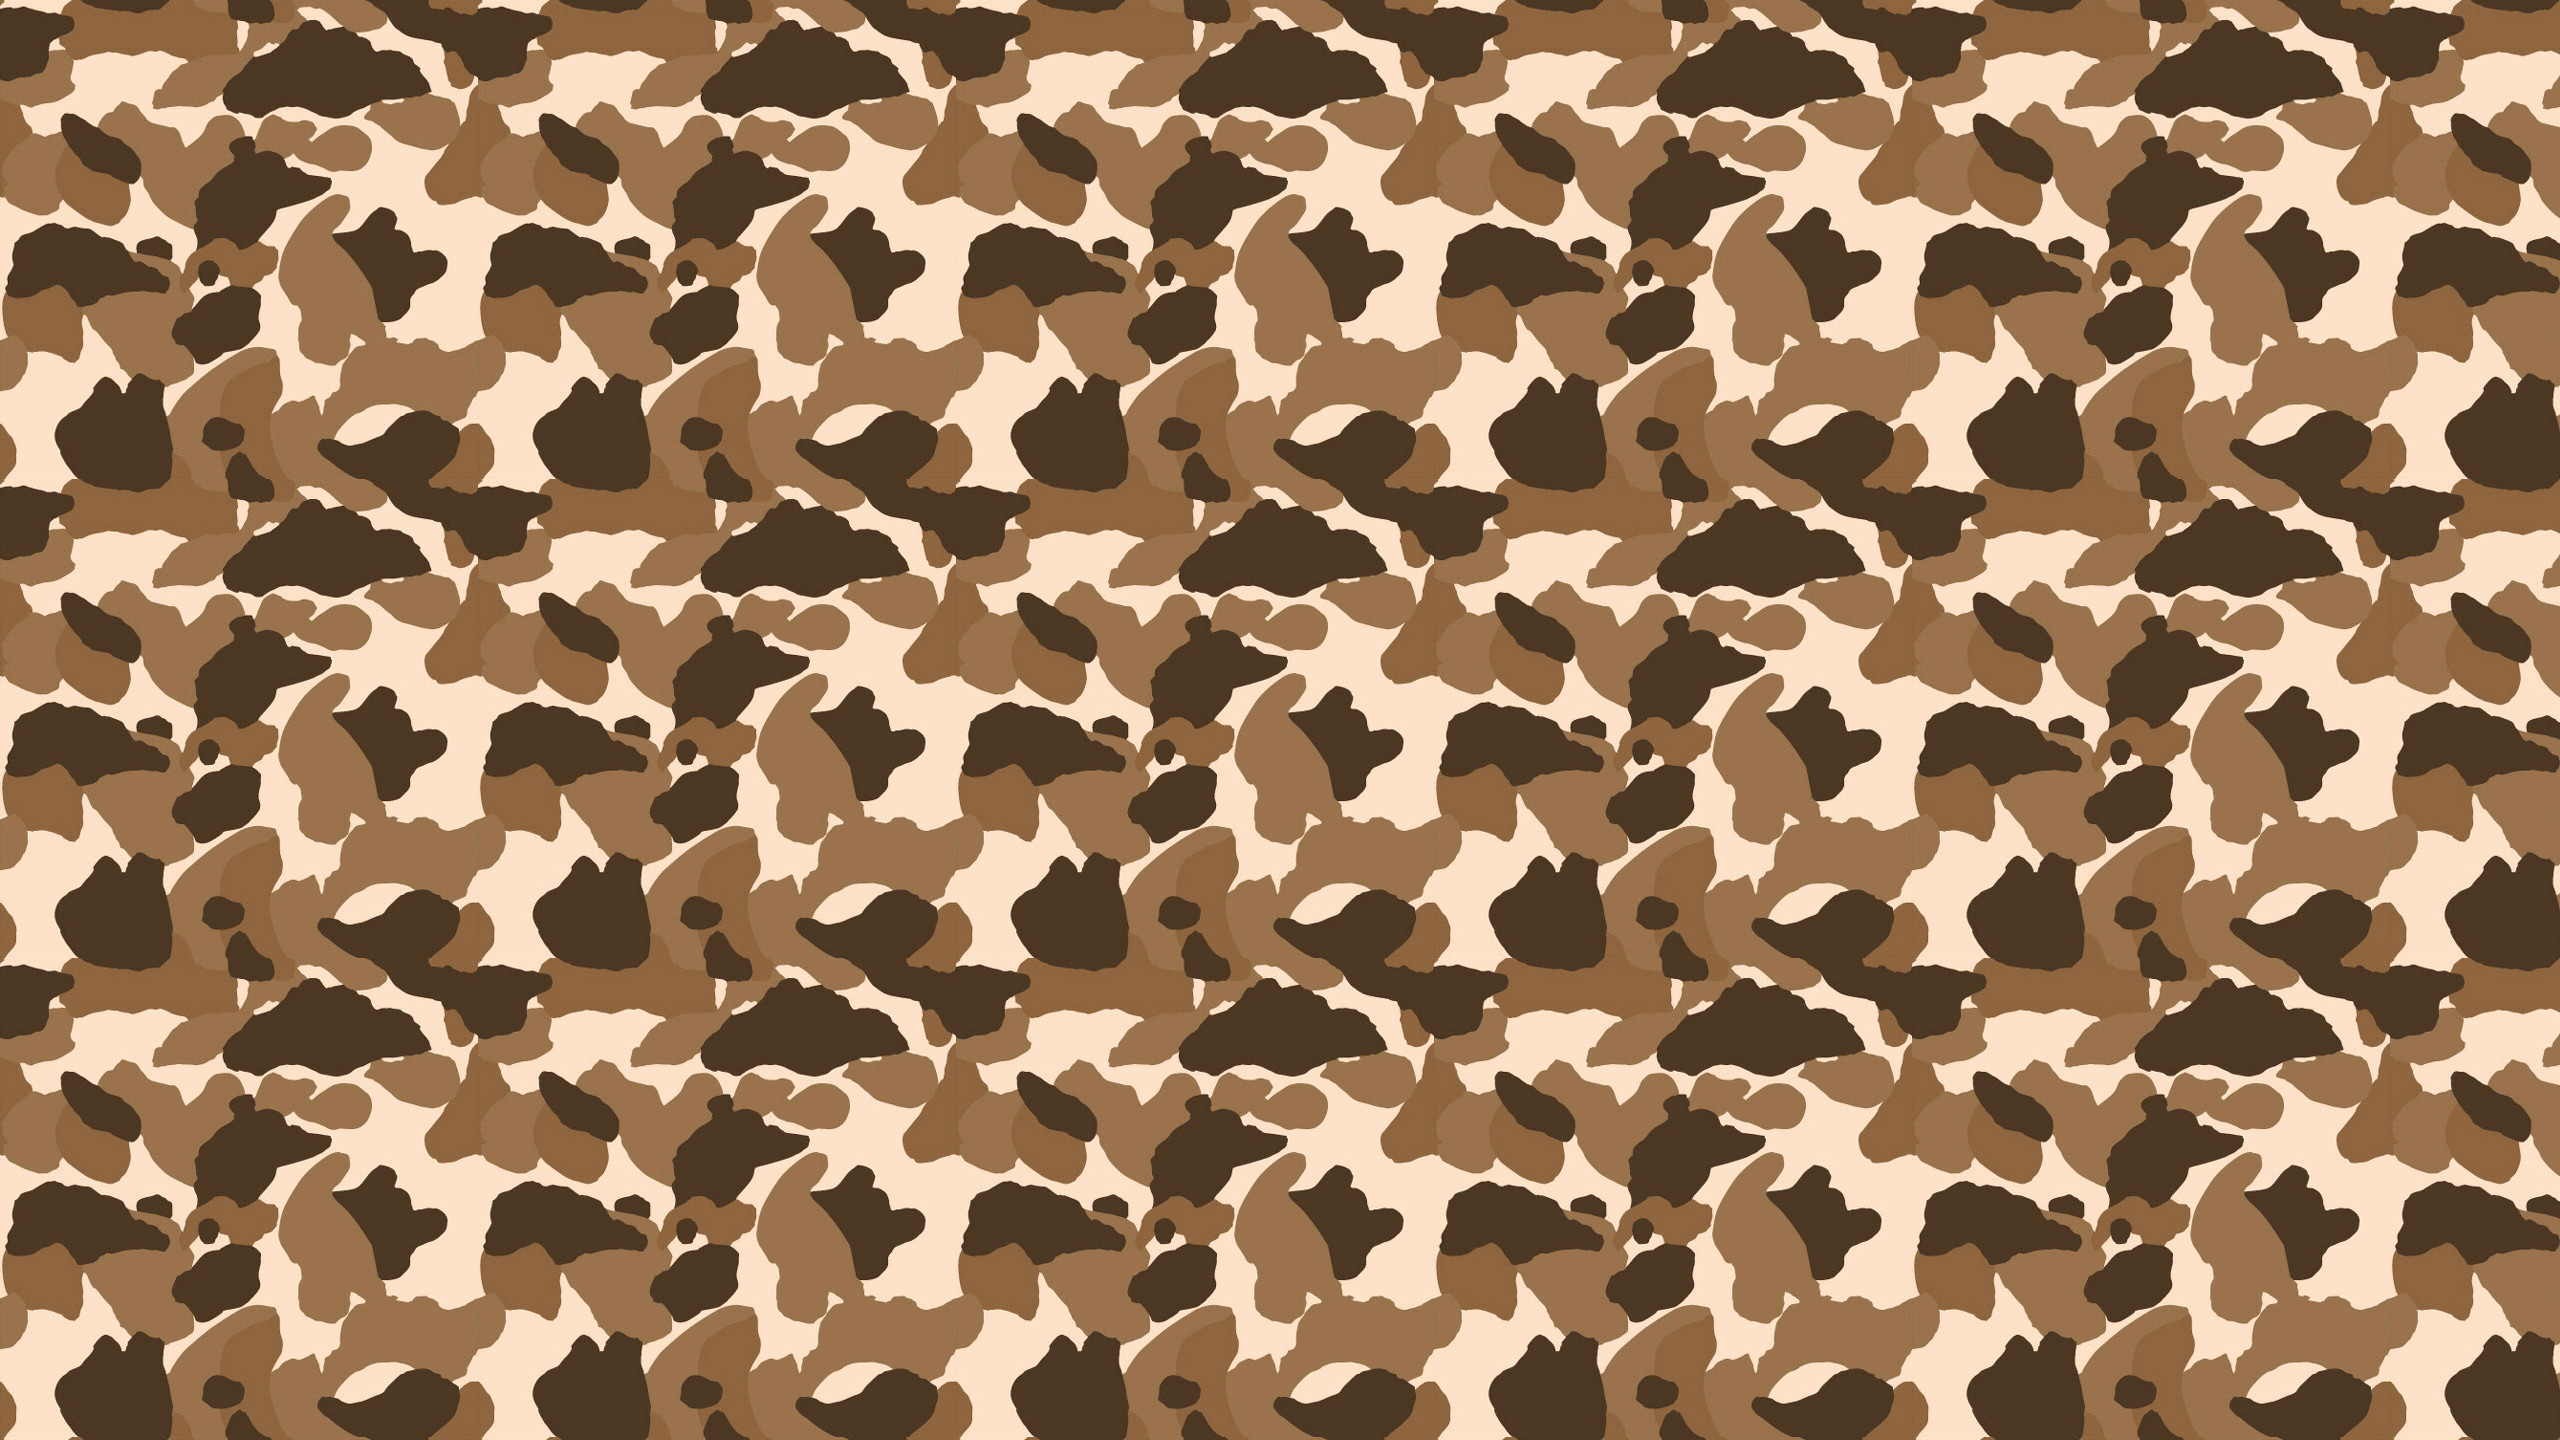 bape wallpaper,military camouflage,pattern,camouflage,design,uniform